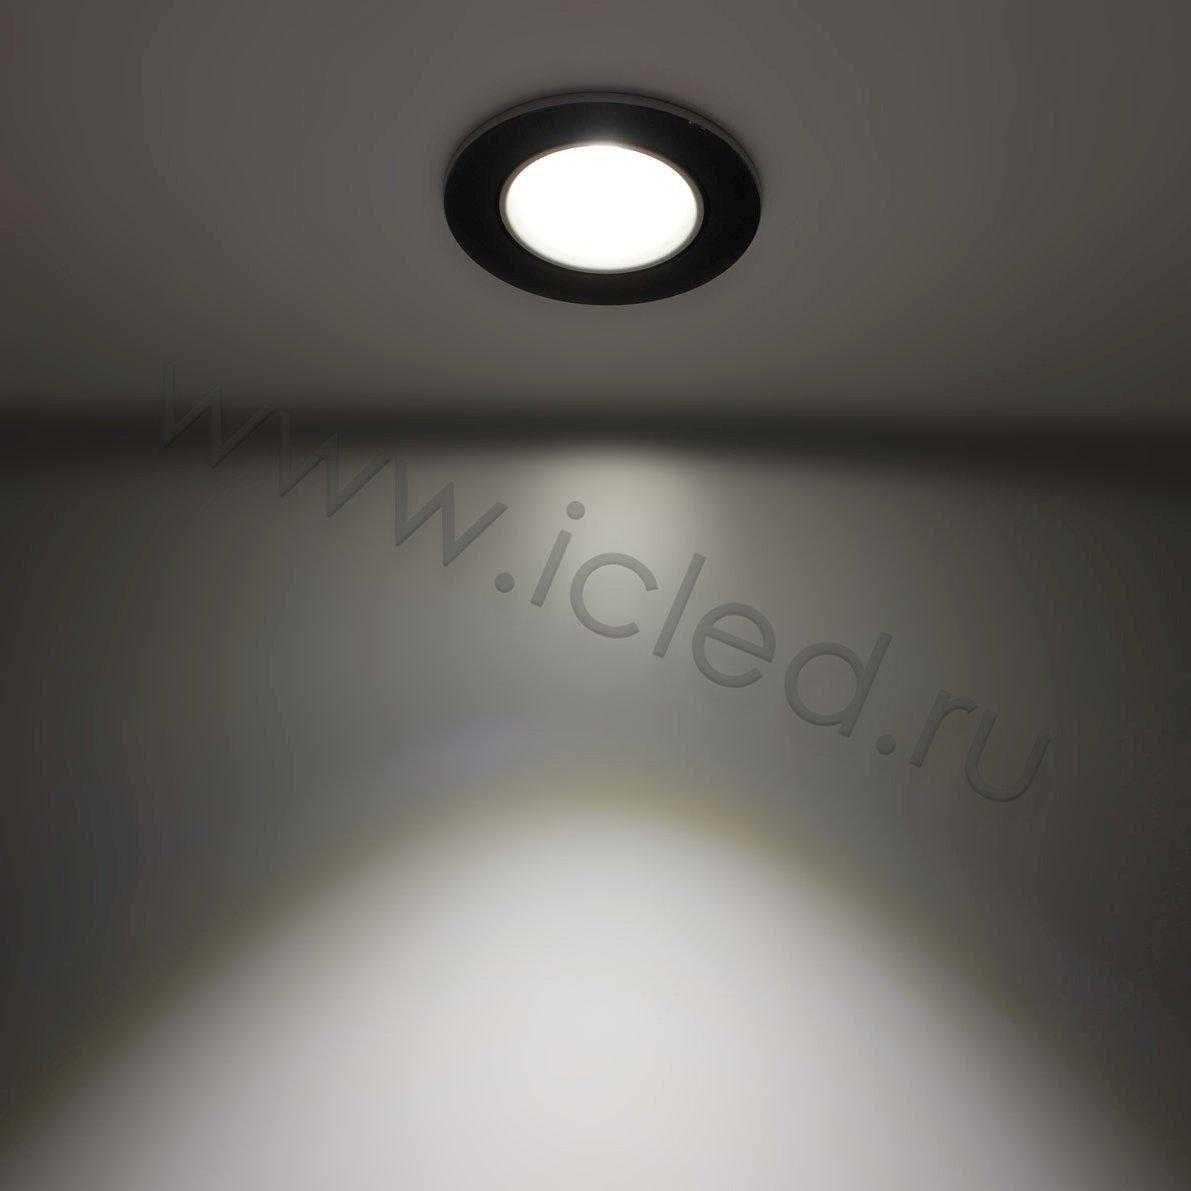 Светодиодные светильники Светодиодный светильник встраиваемый 86 Nest Series Black Round (5W,Day White)